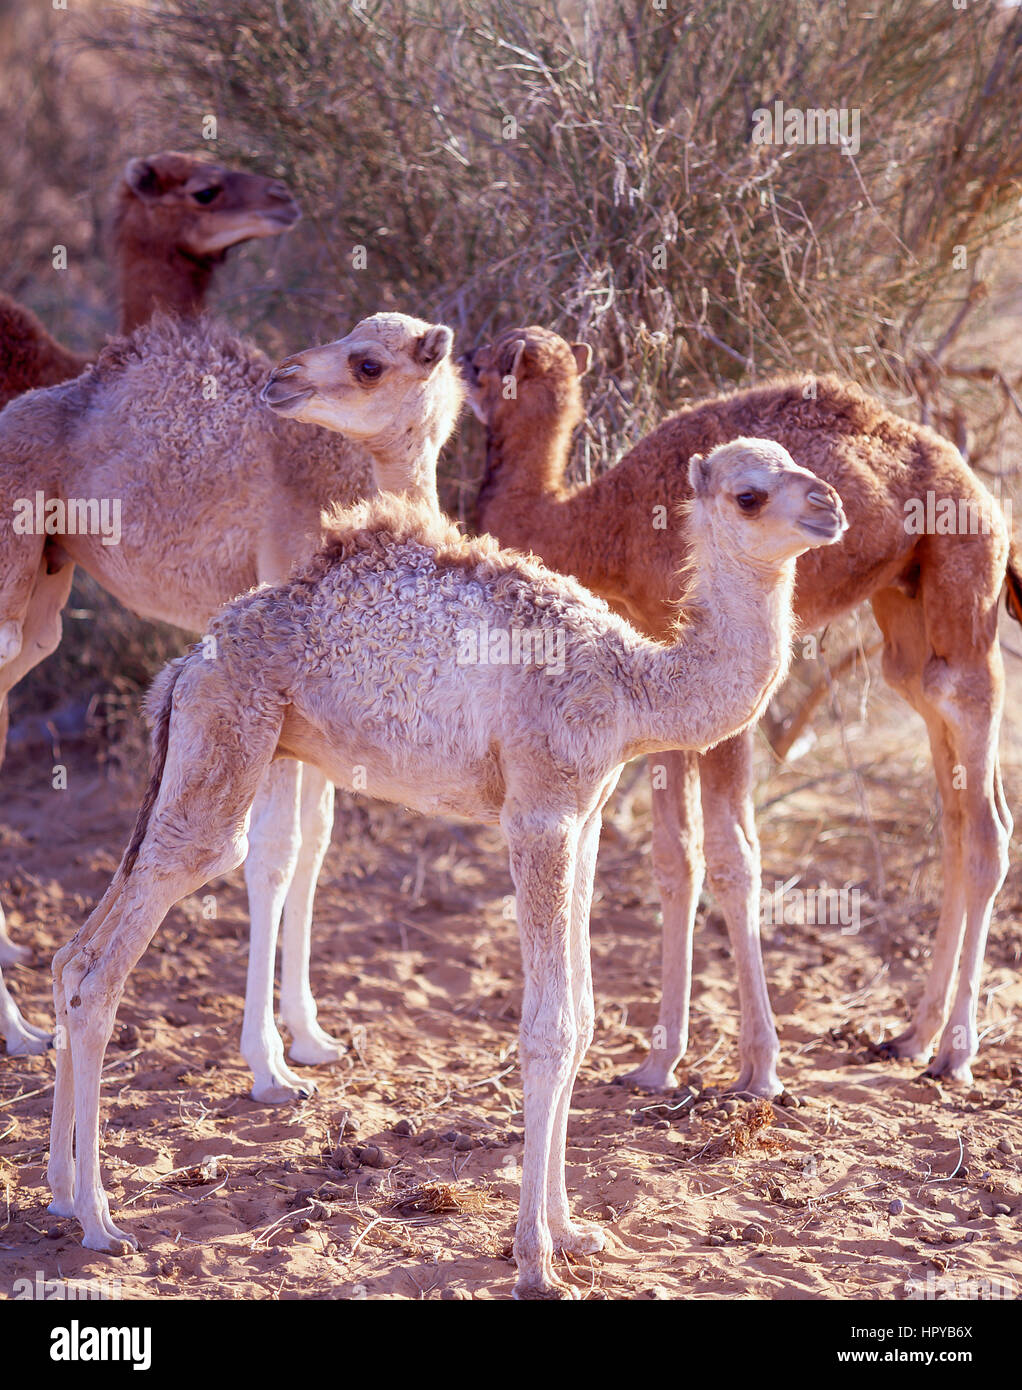 Baby Dromedary camels in Dubai Desert, Dubai, United Arab Emirates Stock Photo